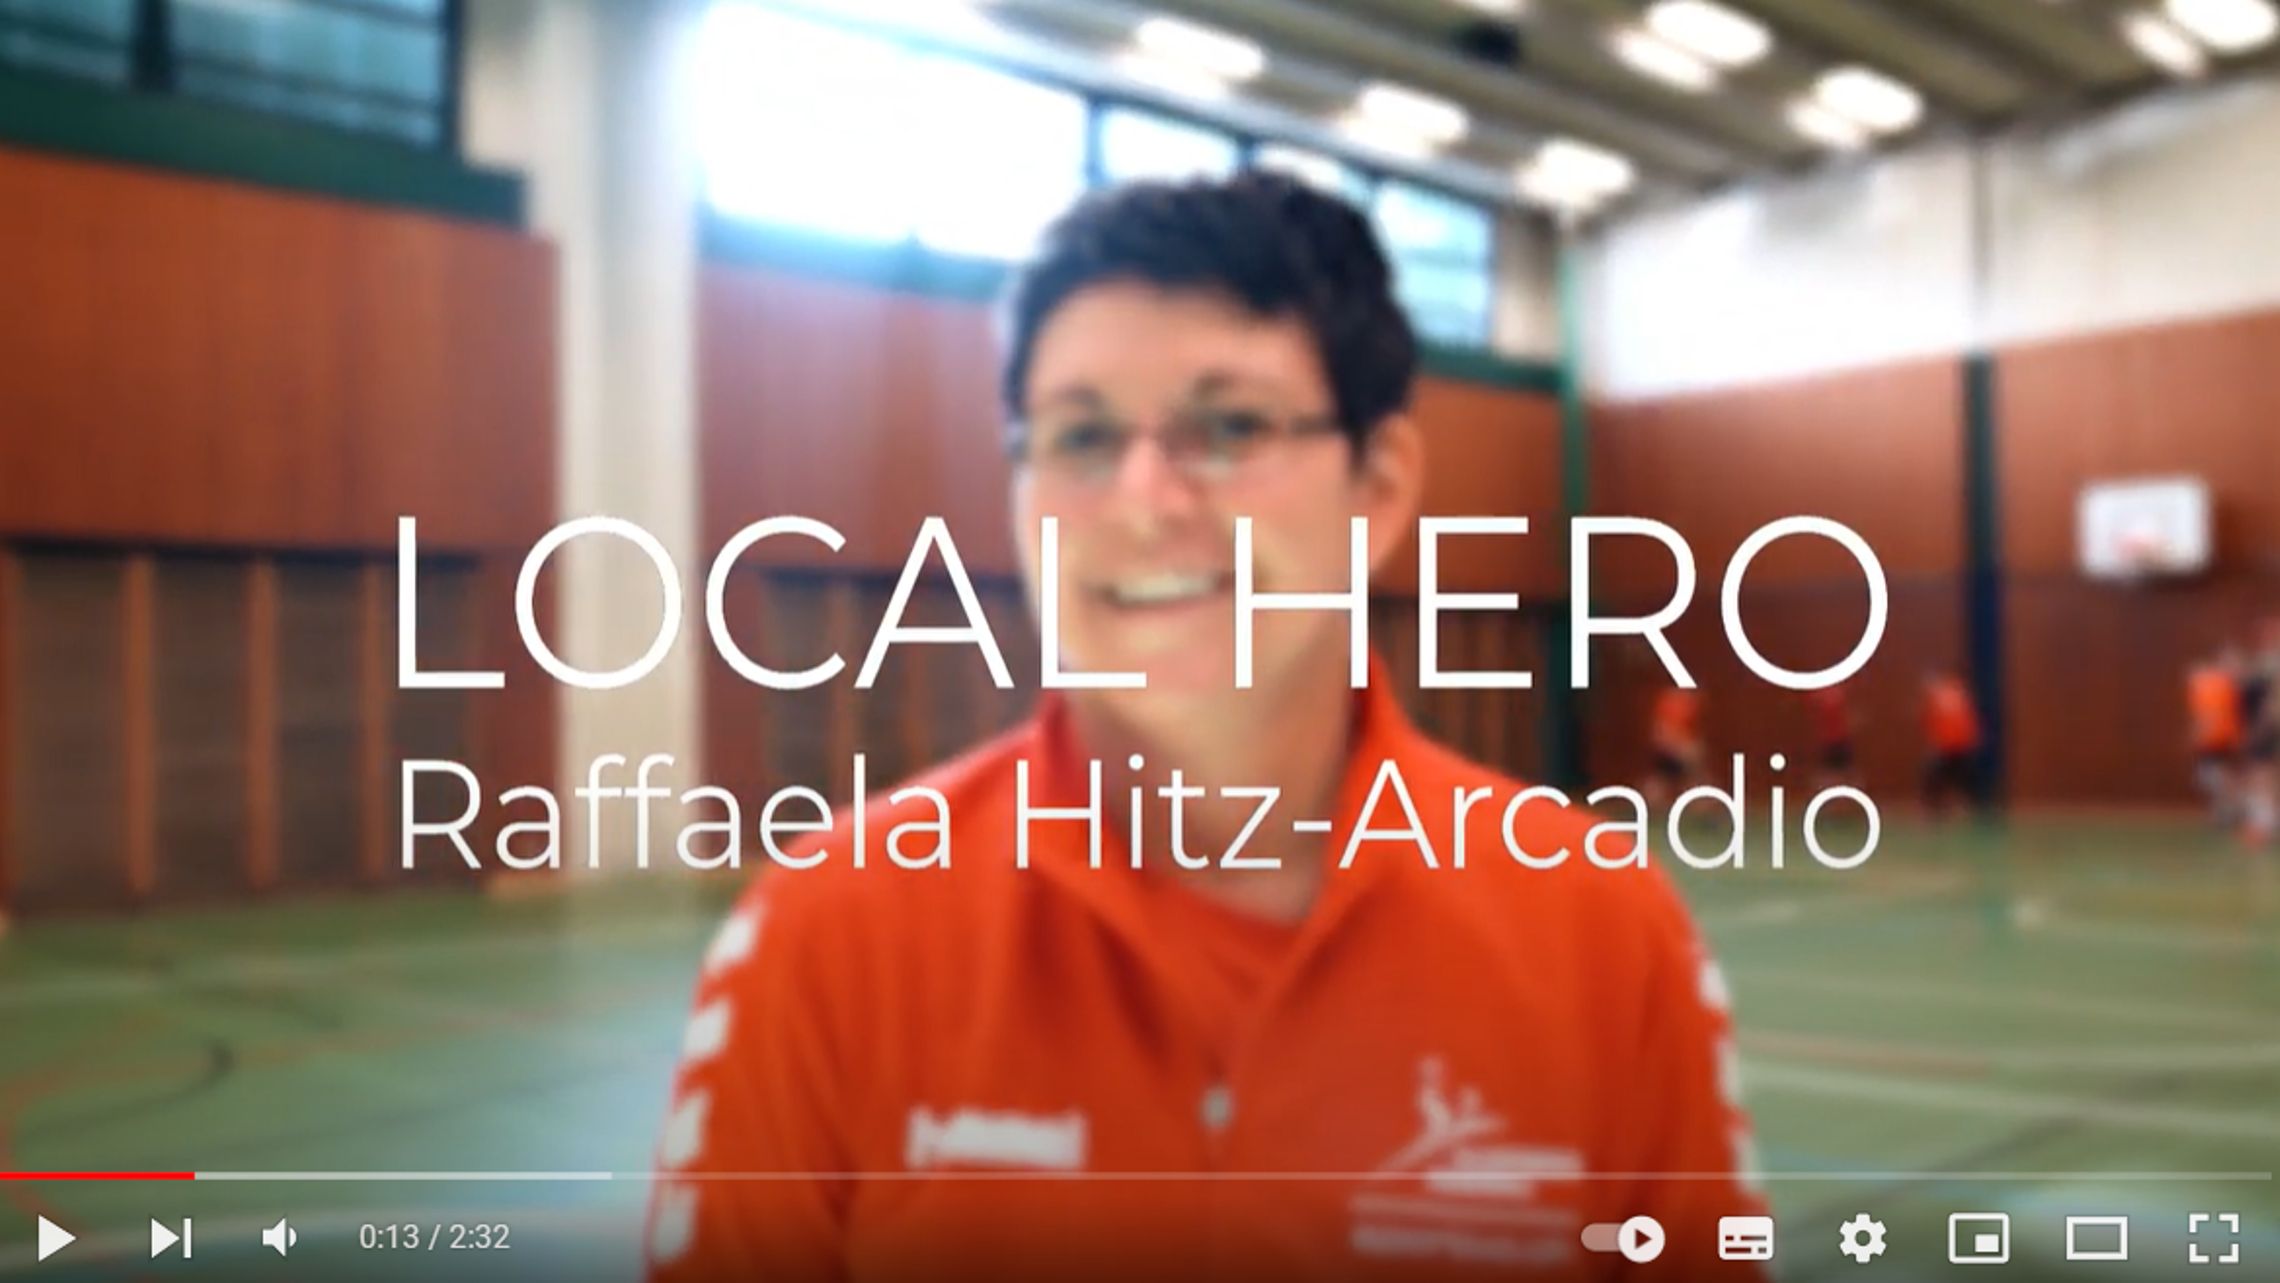 Local Hero Raffaela Hitz-Arcadio, TV Zofingen Handball